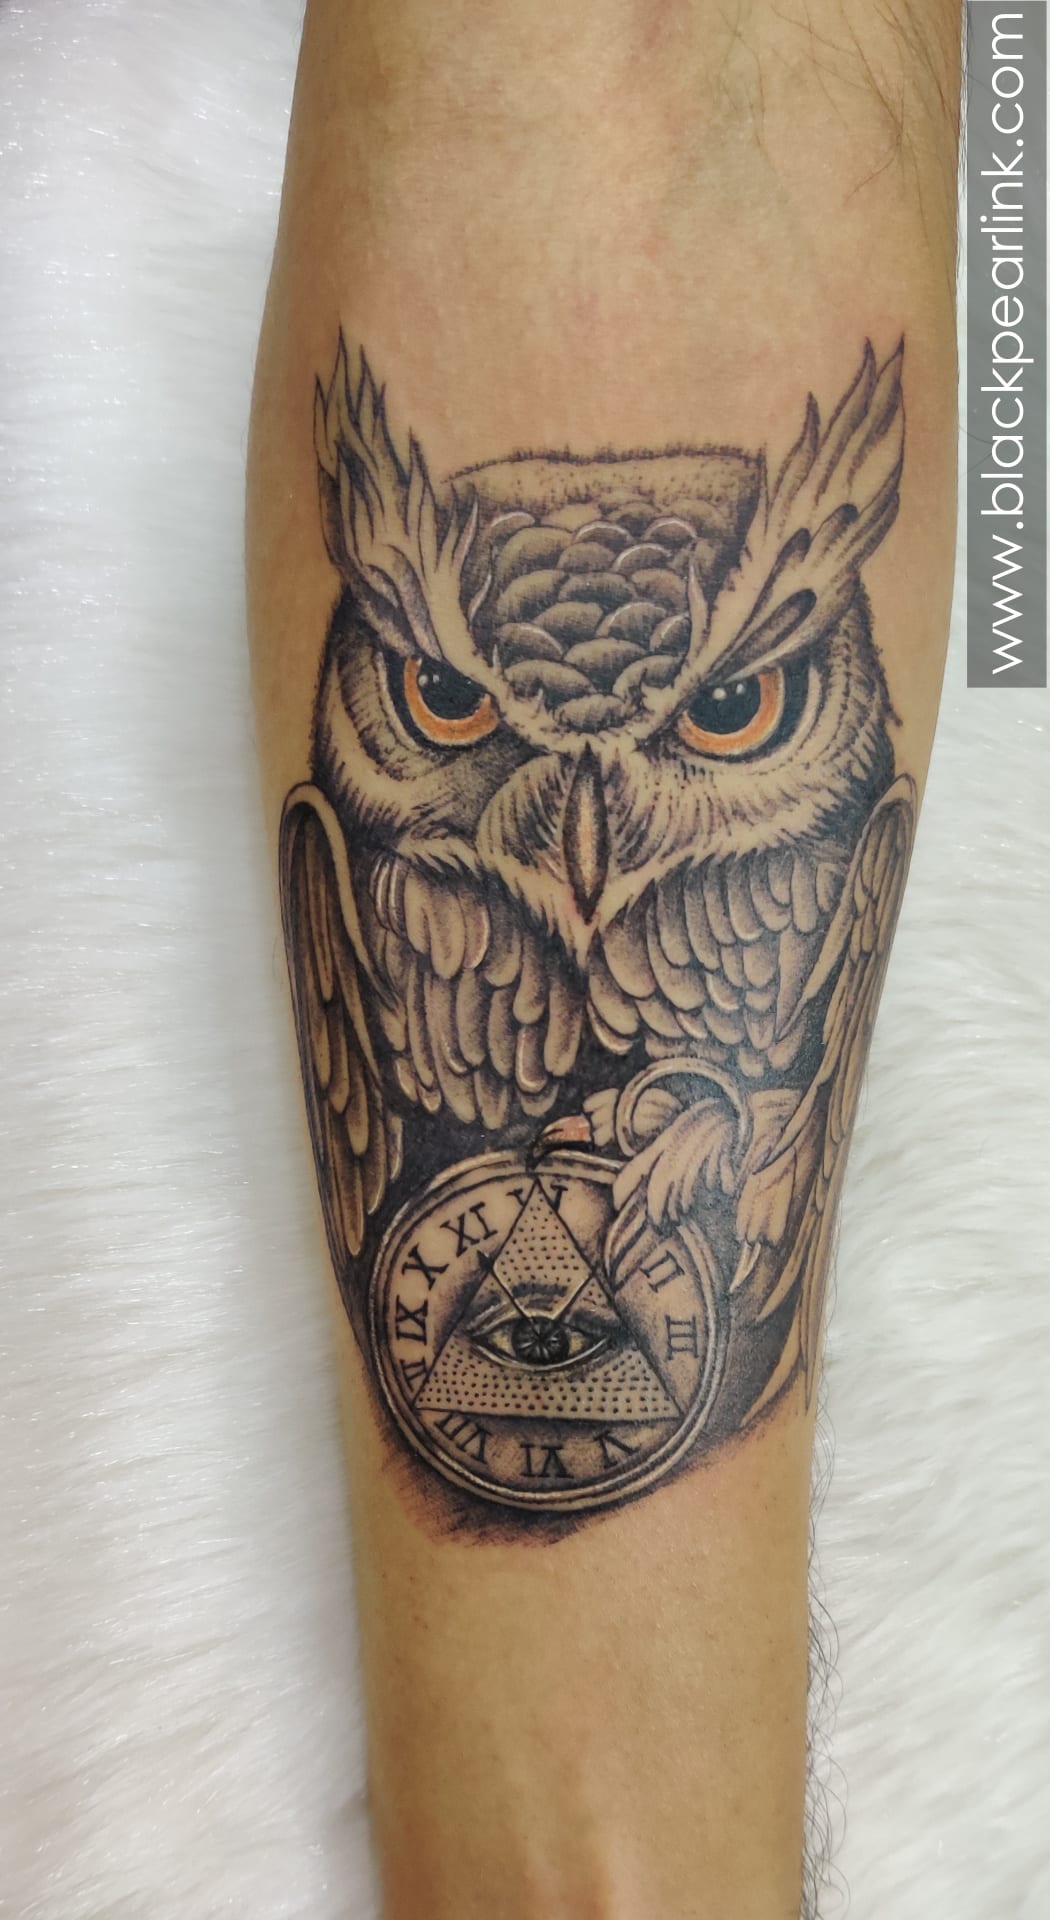 evil owl eyes tattoo